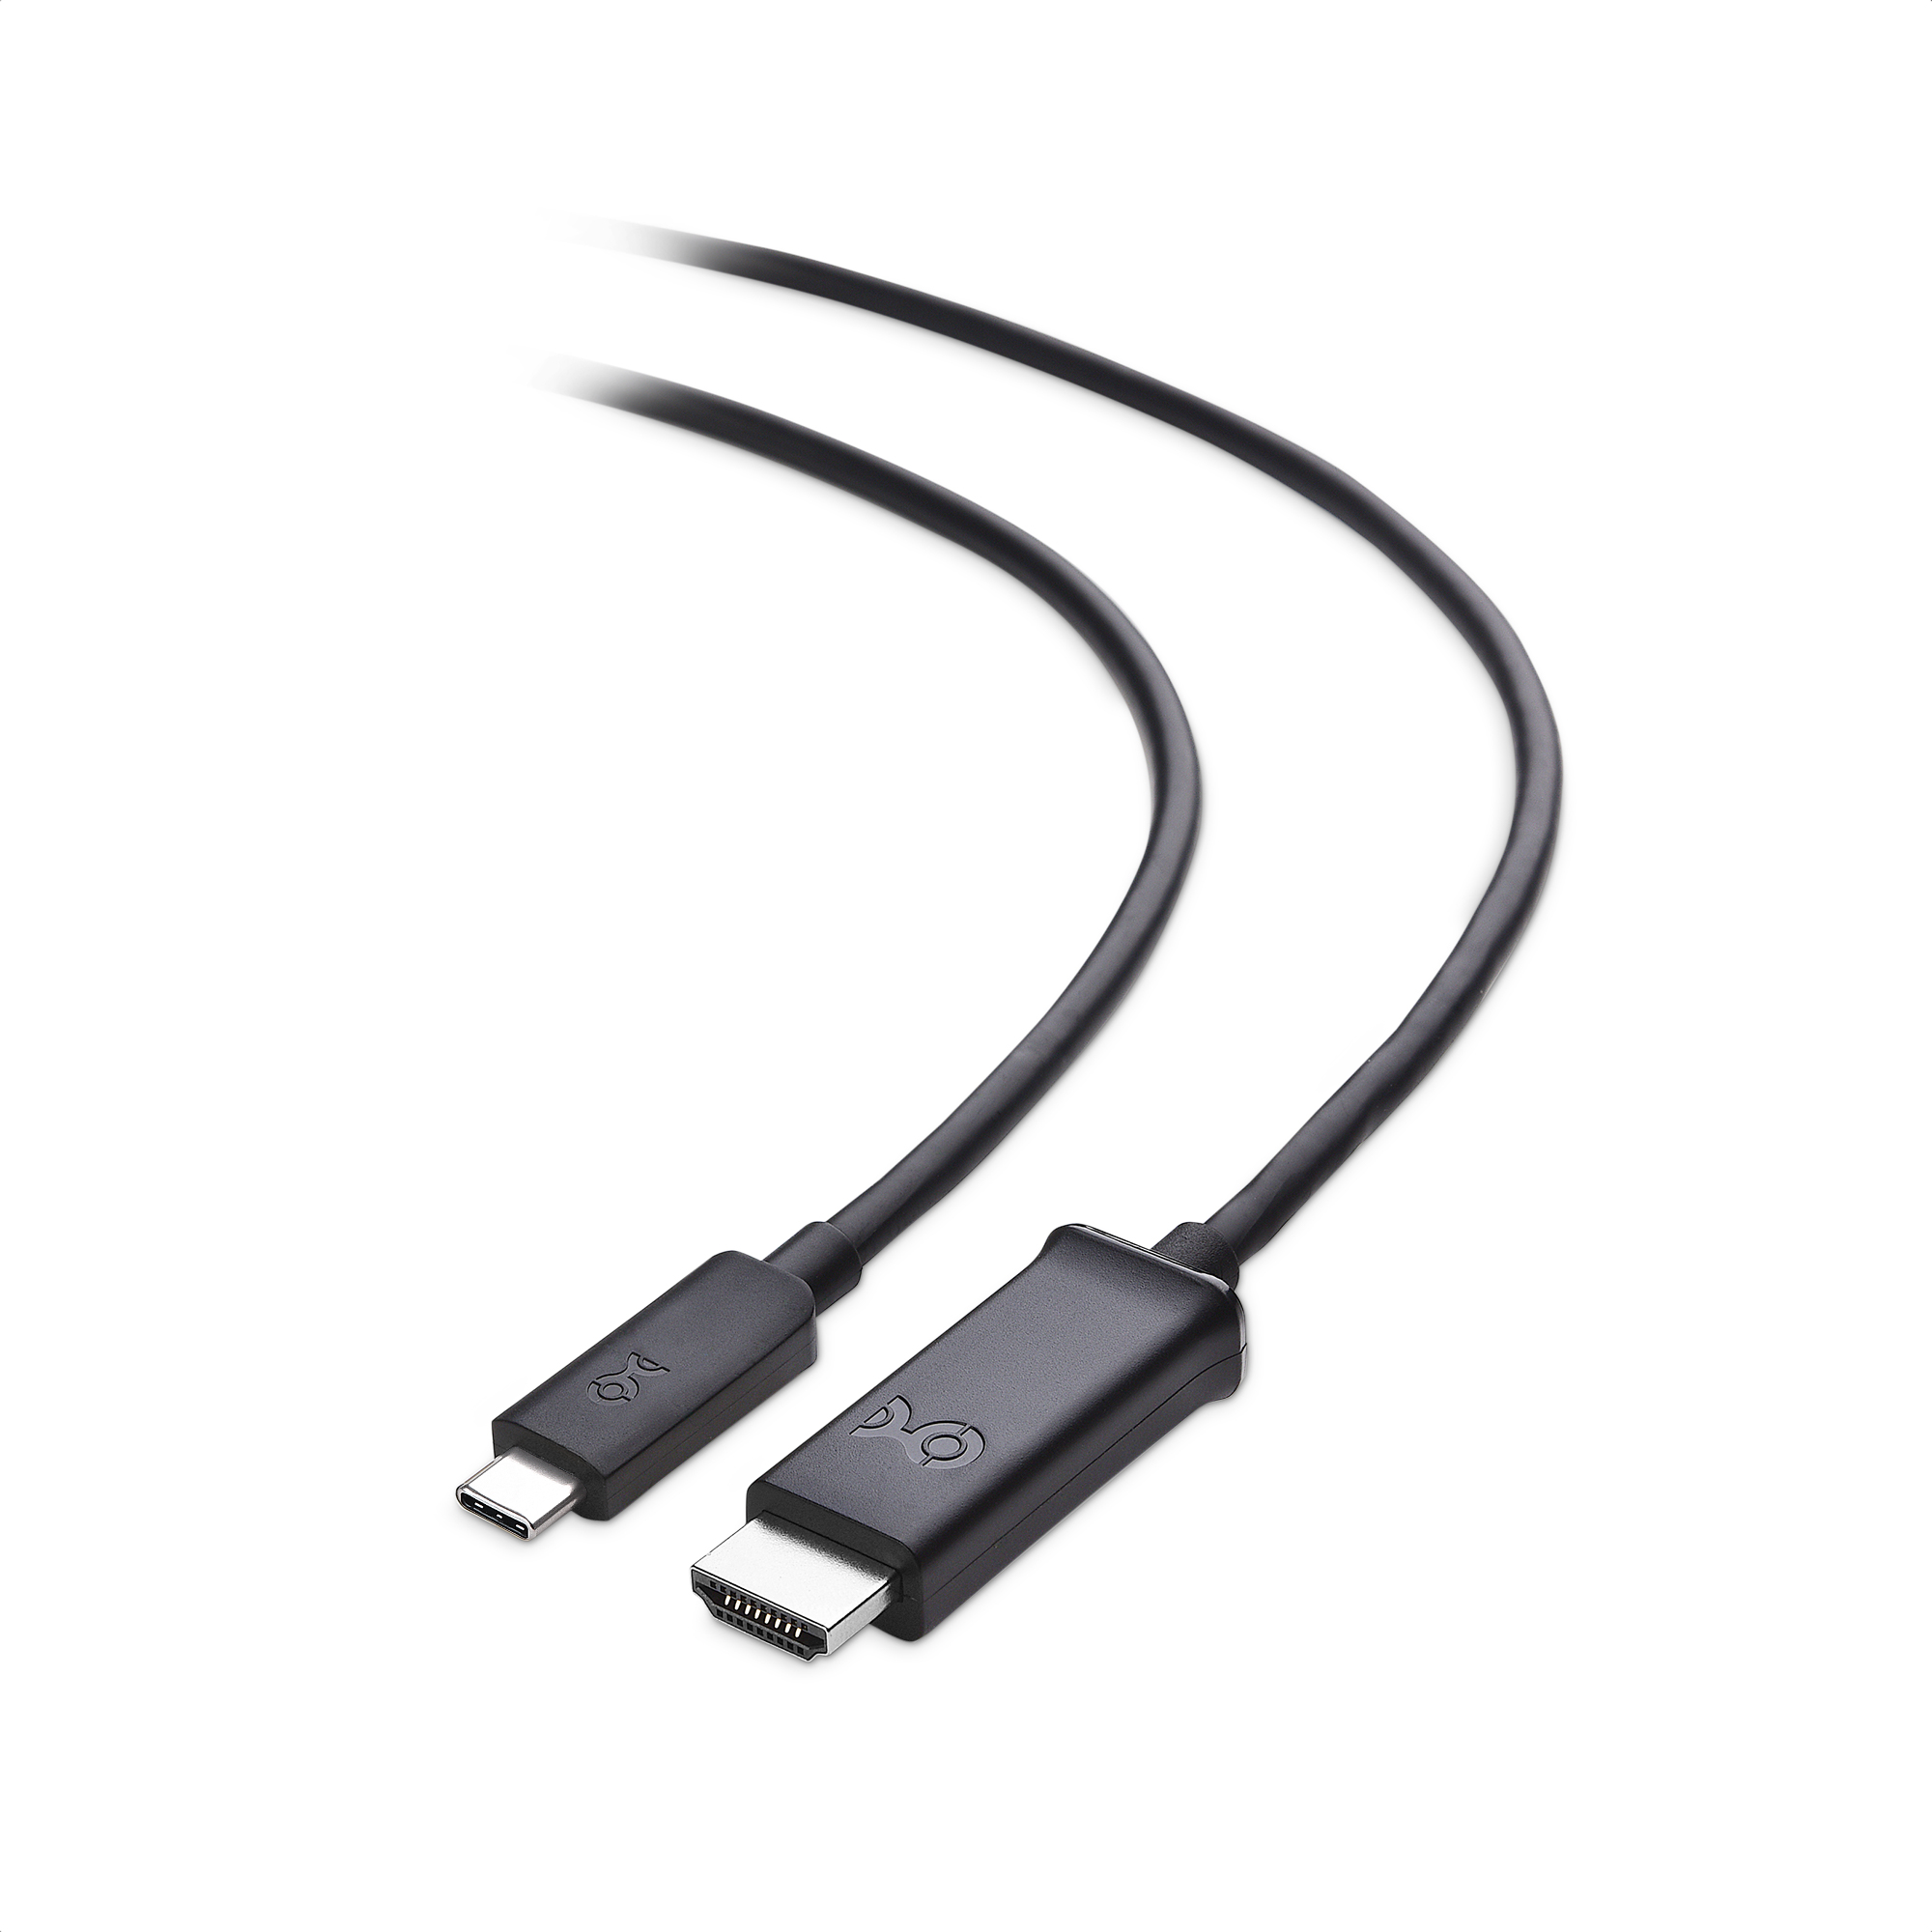  USB C to HDMI Adapter for Samsung DeX,Desktop